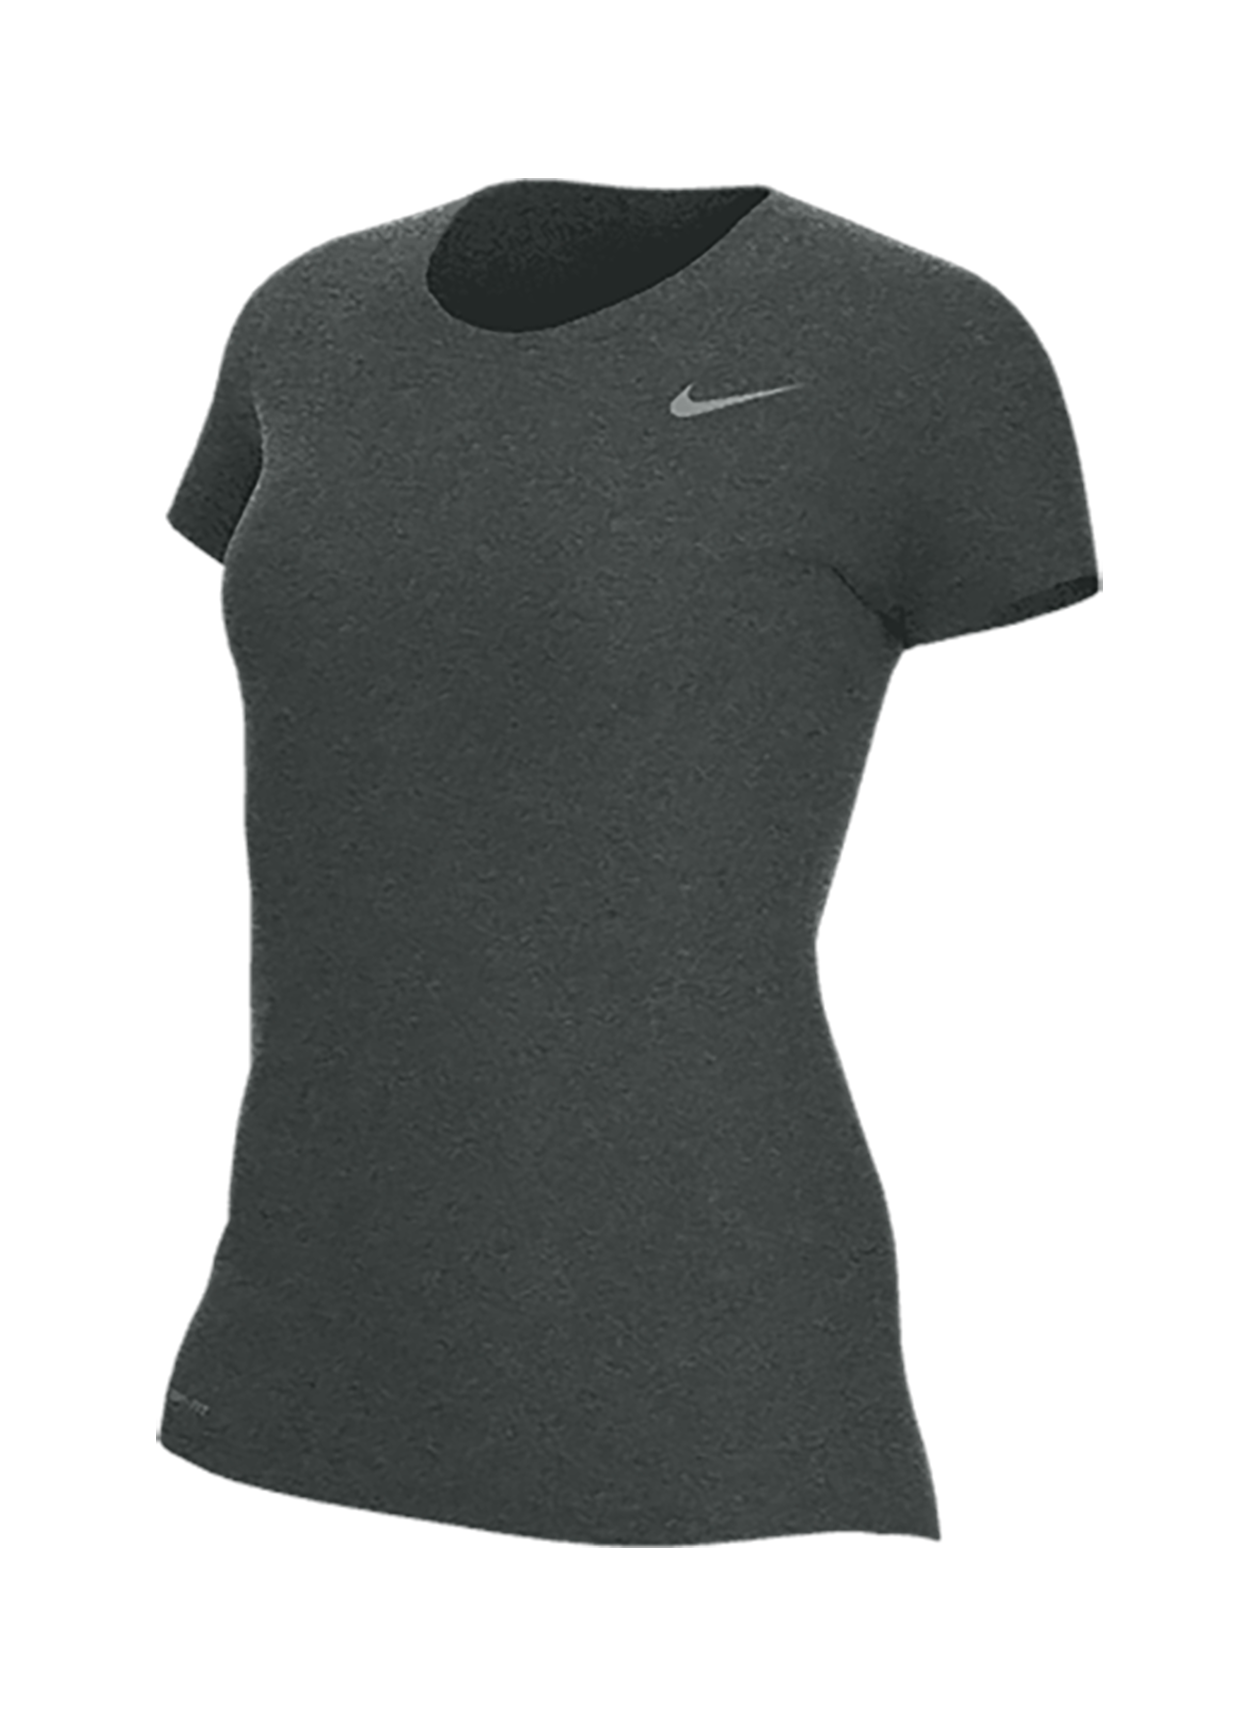 Nike Women's Carbon Heather Legend Training T-Shirt